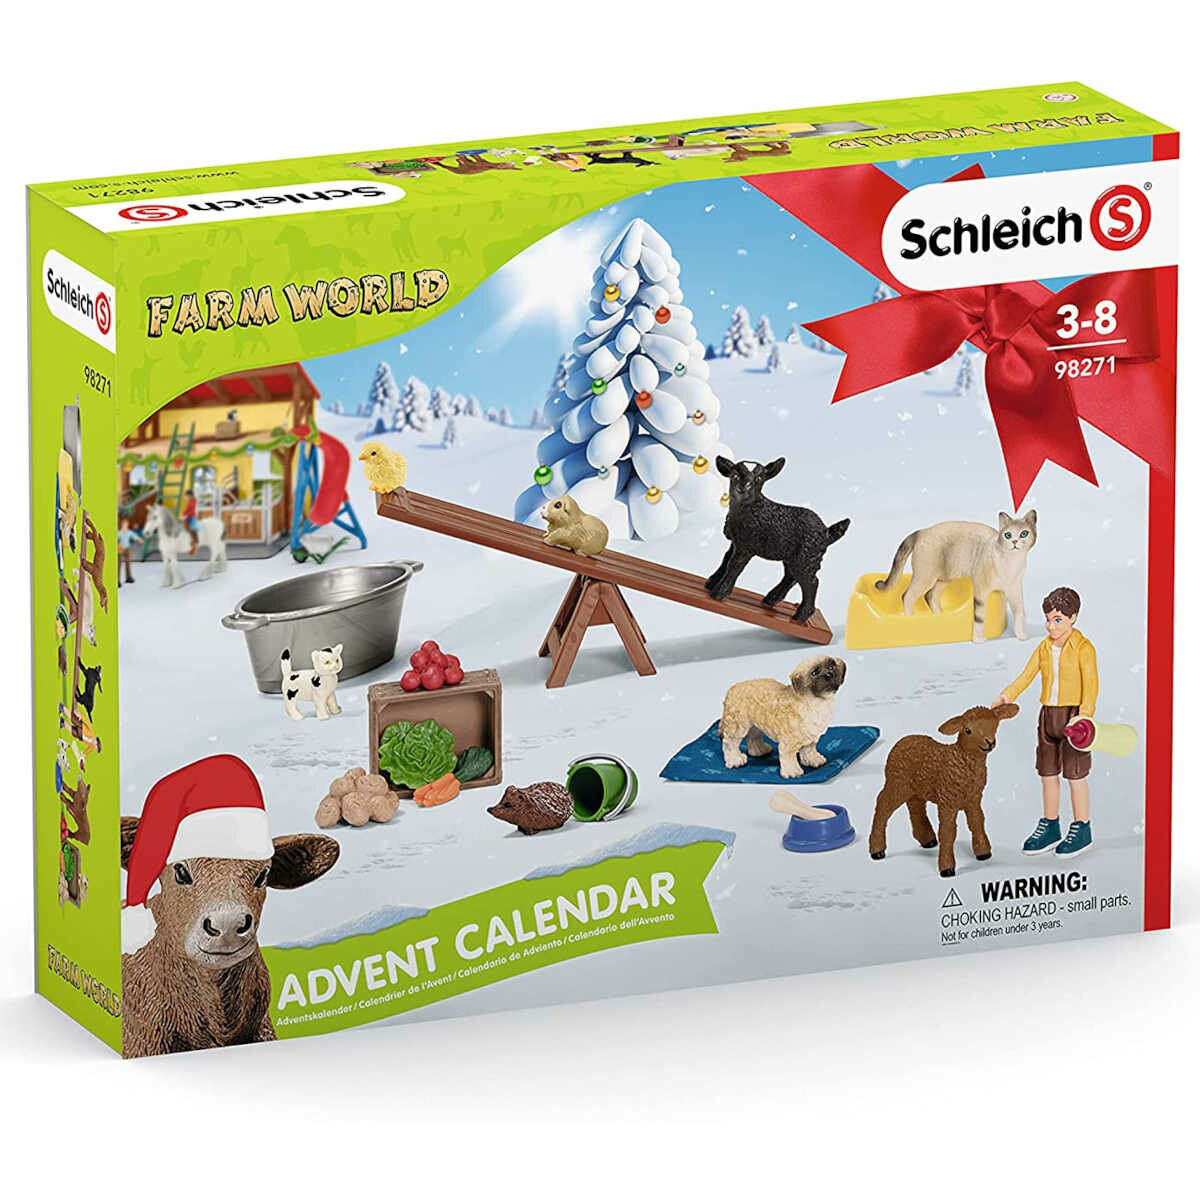 Schleich 98271 Advent Calendar Farm World: Counting Down To Farmyard Fun 